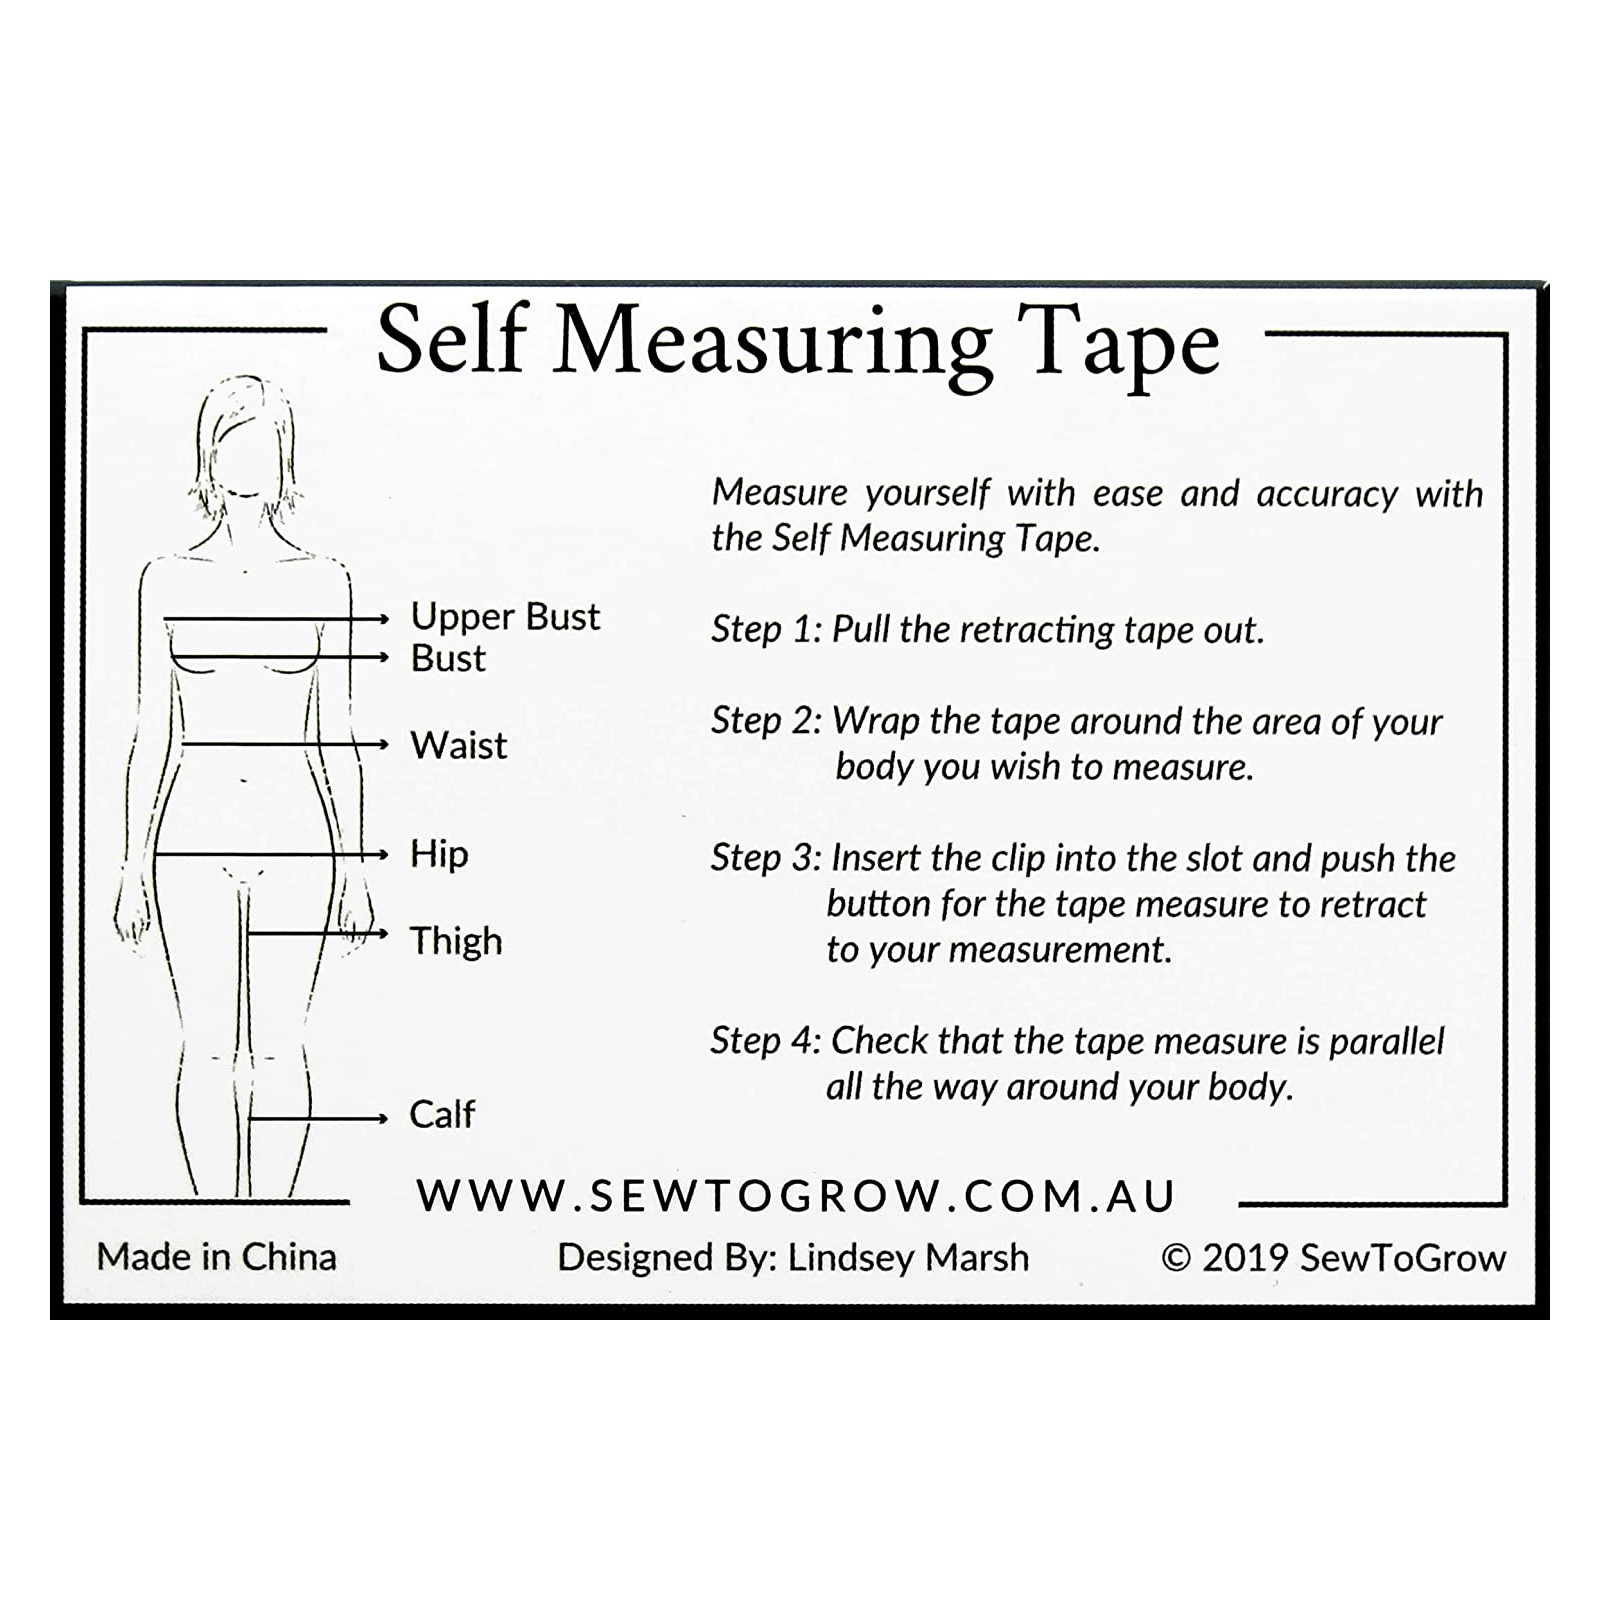 Sew to Grow Self Measuring Tape Measure